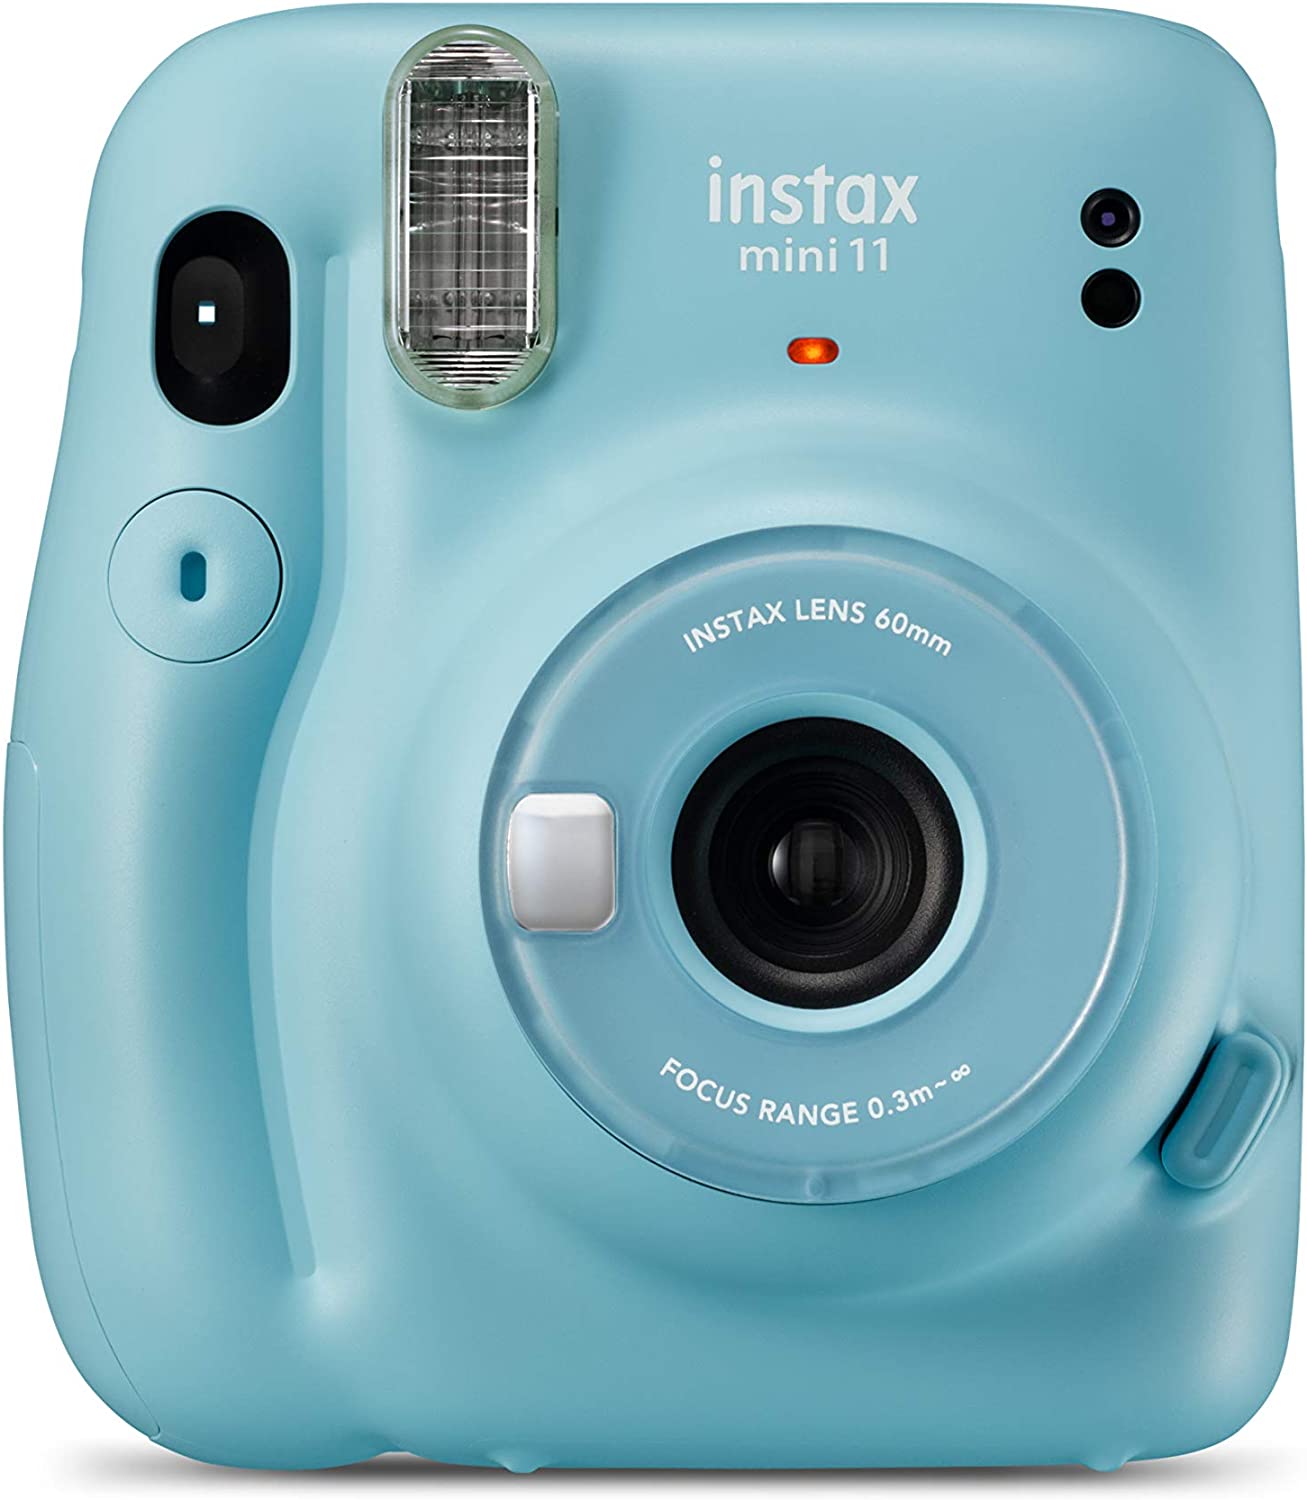 Fujifilm Instax Mini 11 Sky Blue Camara Instantanea - Tamao de Imagen 62x46mm - Flash Auto - Mini Espejo para Selfies - Correa de Mano y 2 Botones de Obturador Diferentes